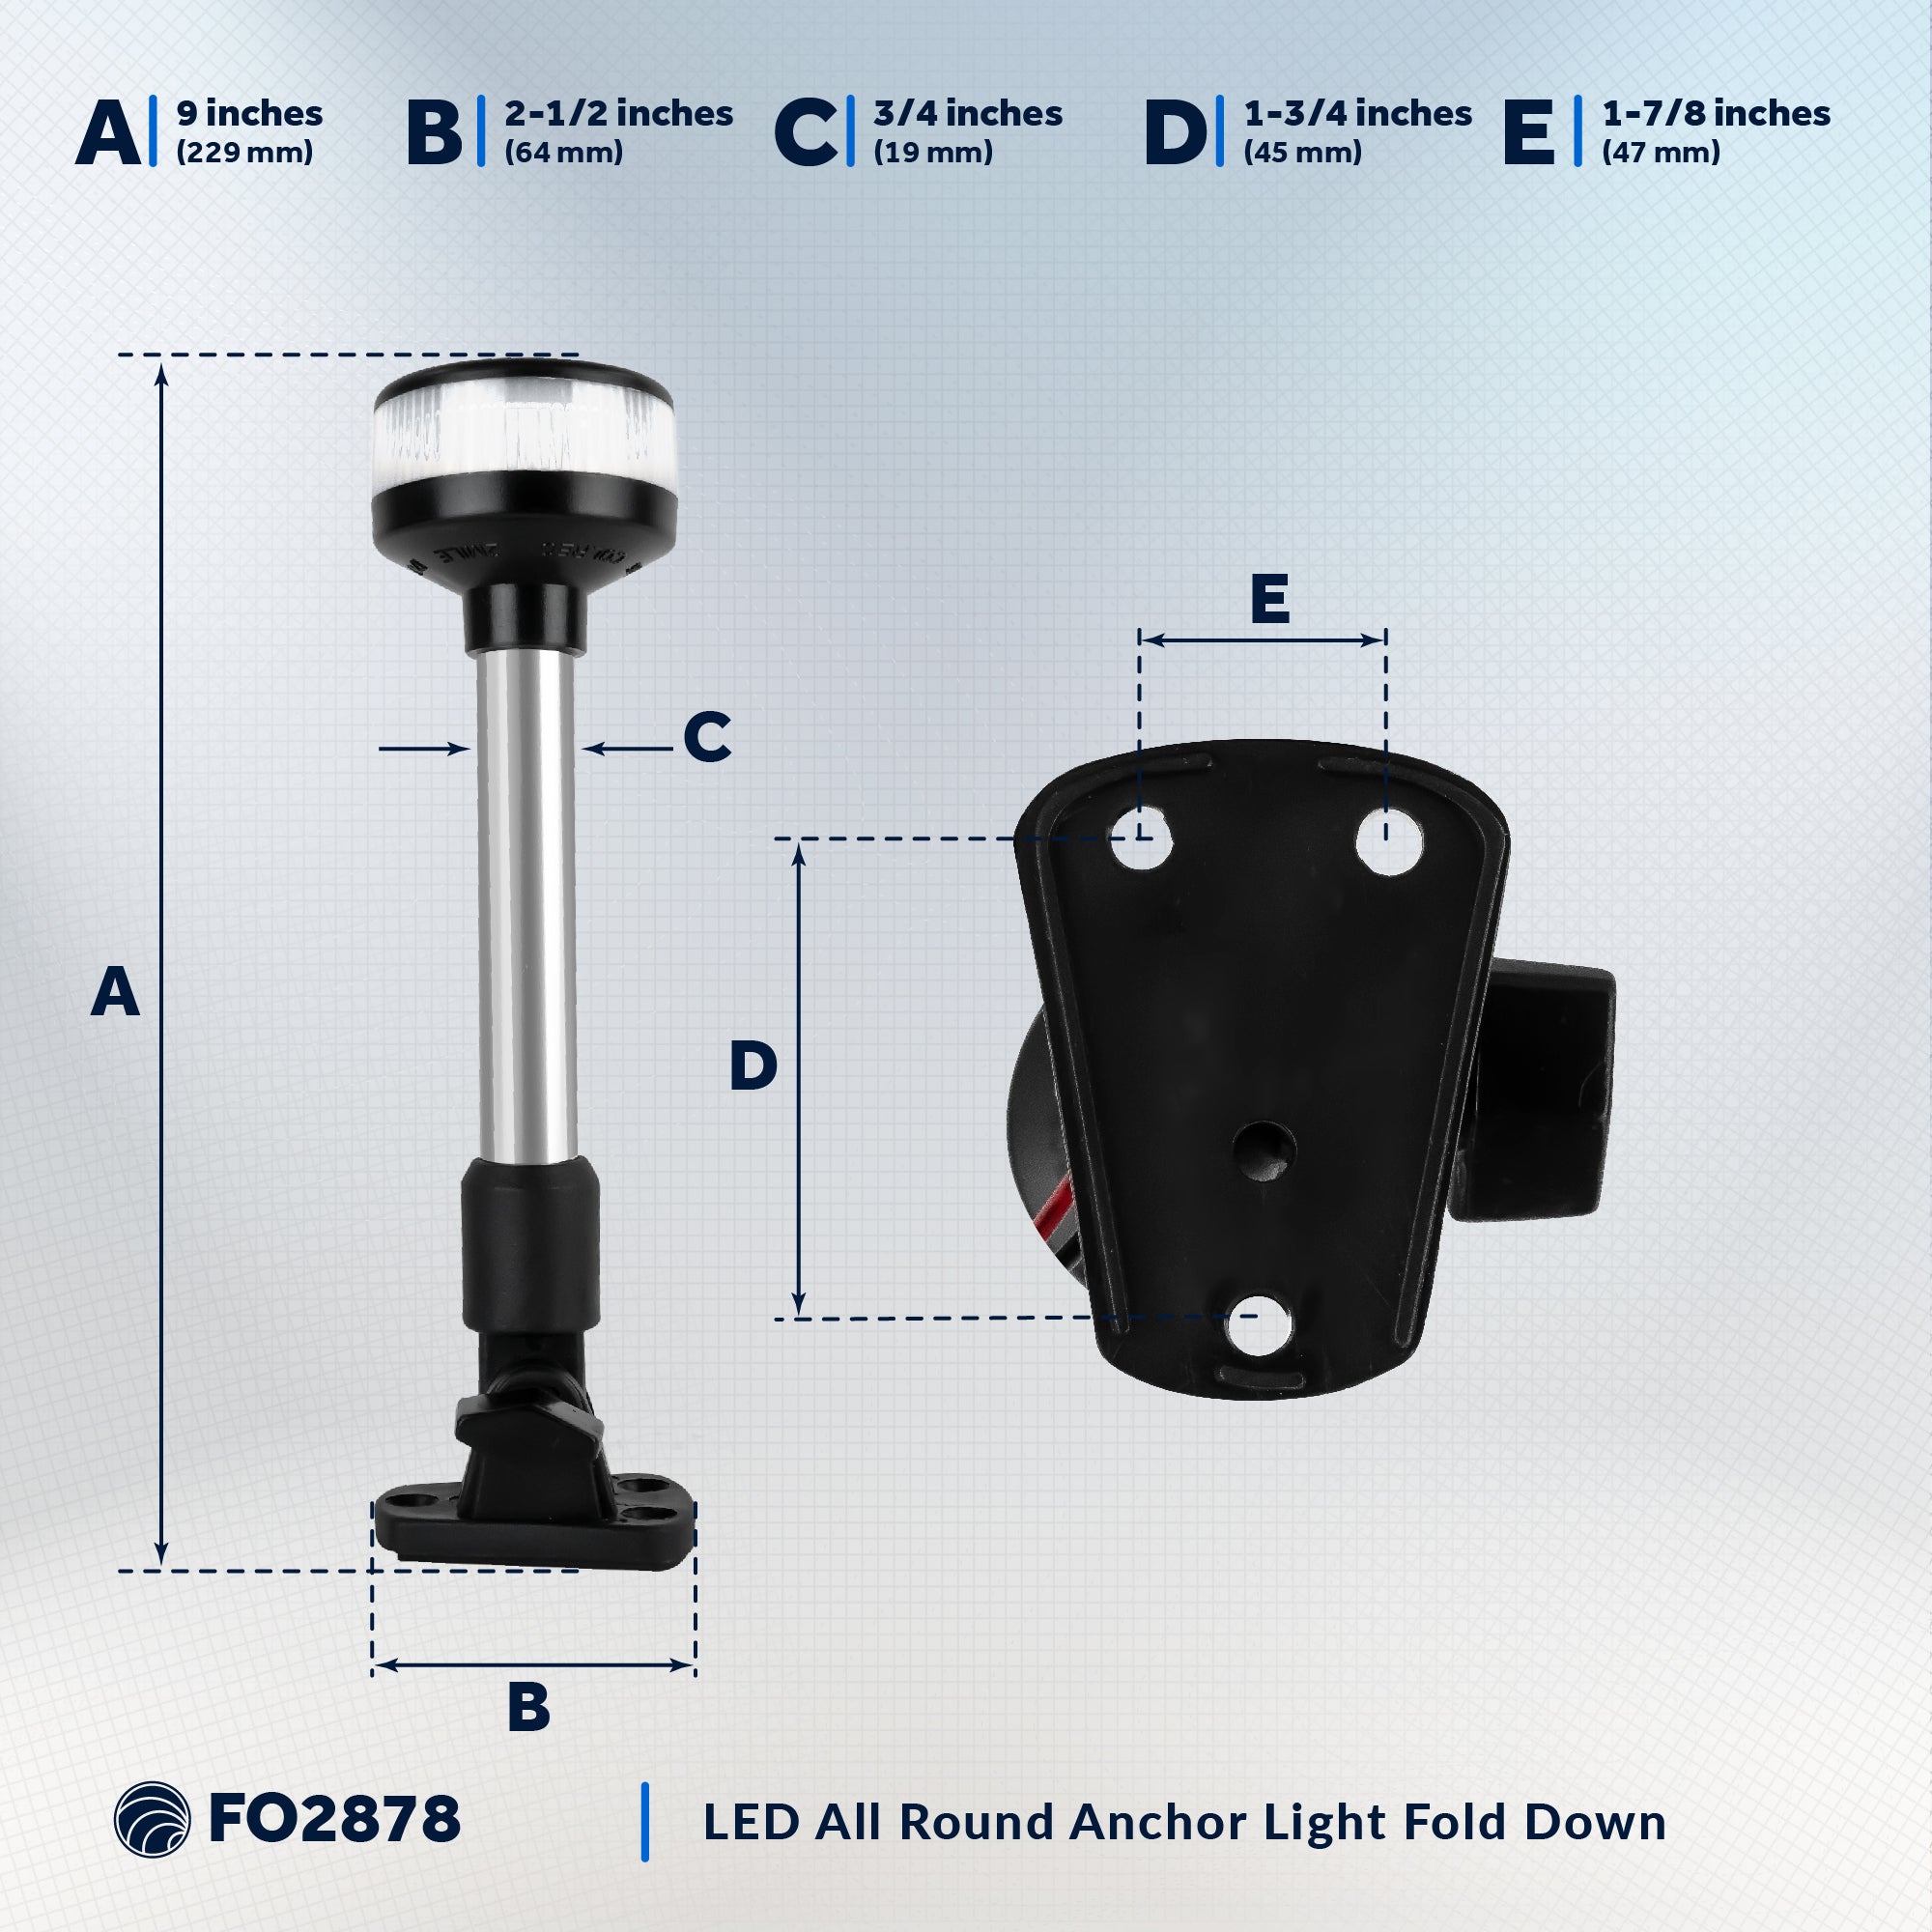 LED Anchor Navigation Light 9", Fold Down, 2NM - FO2878